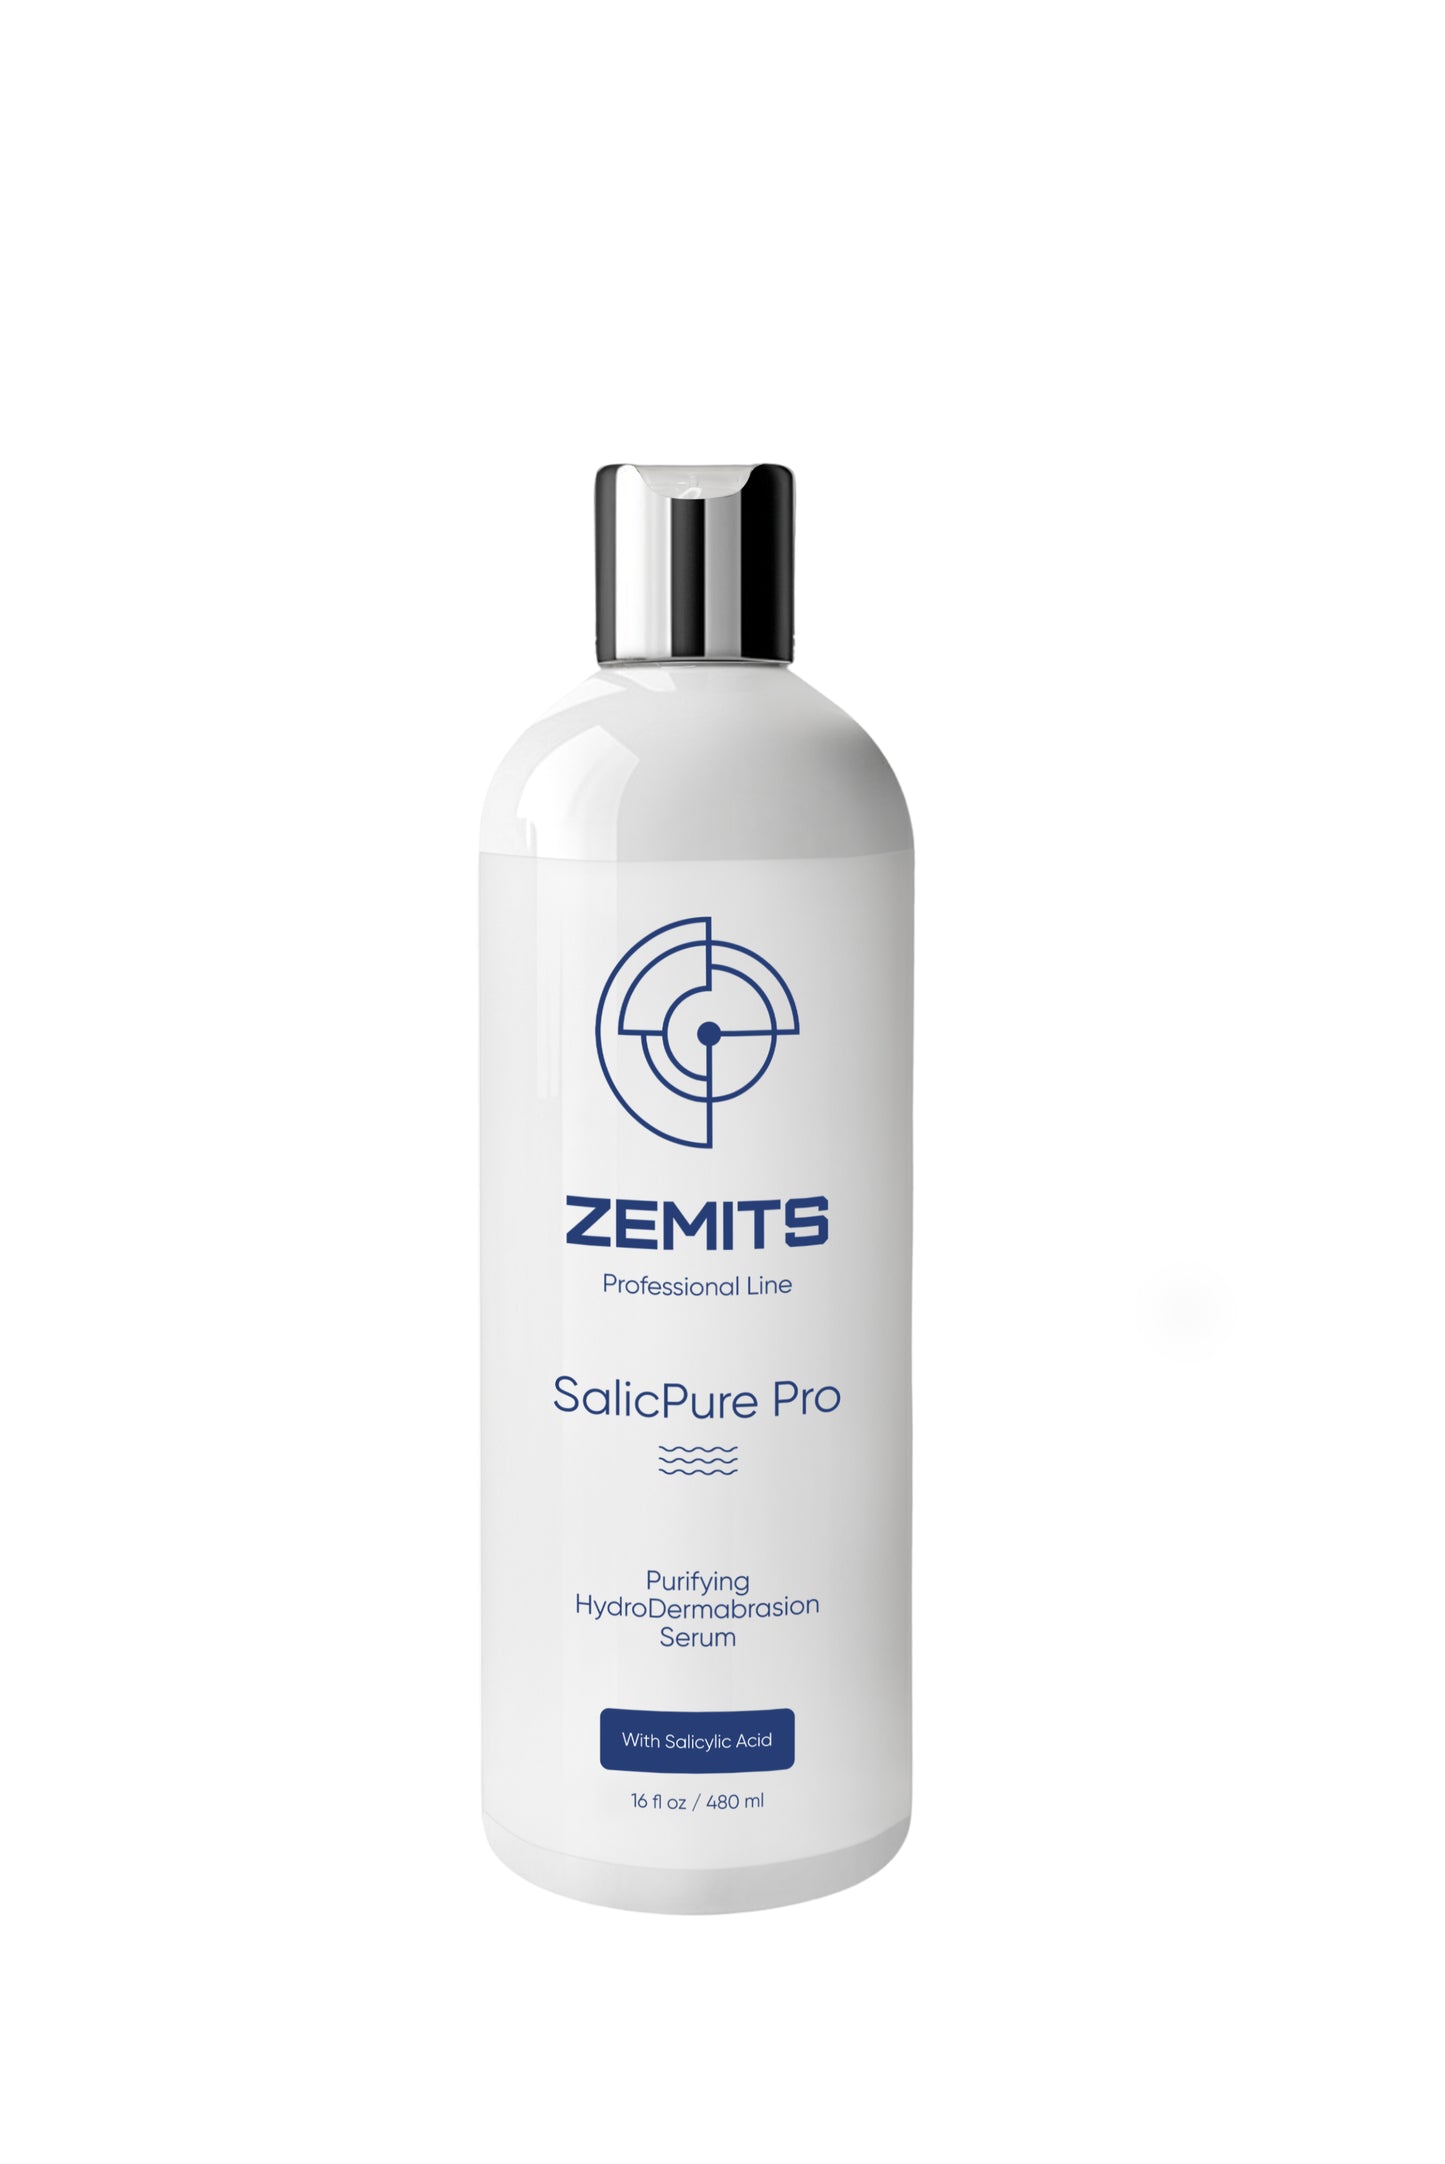 Zemits SalicPure Pro  Purifying HydroDermabrasion Serum with Salicylic Acid, 16 fl oz